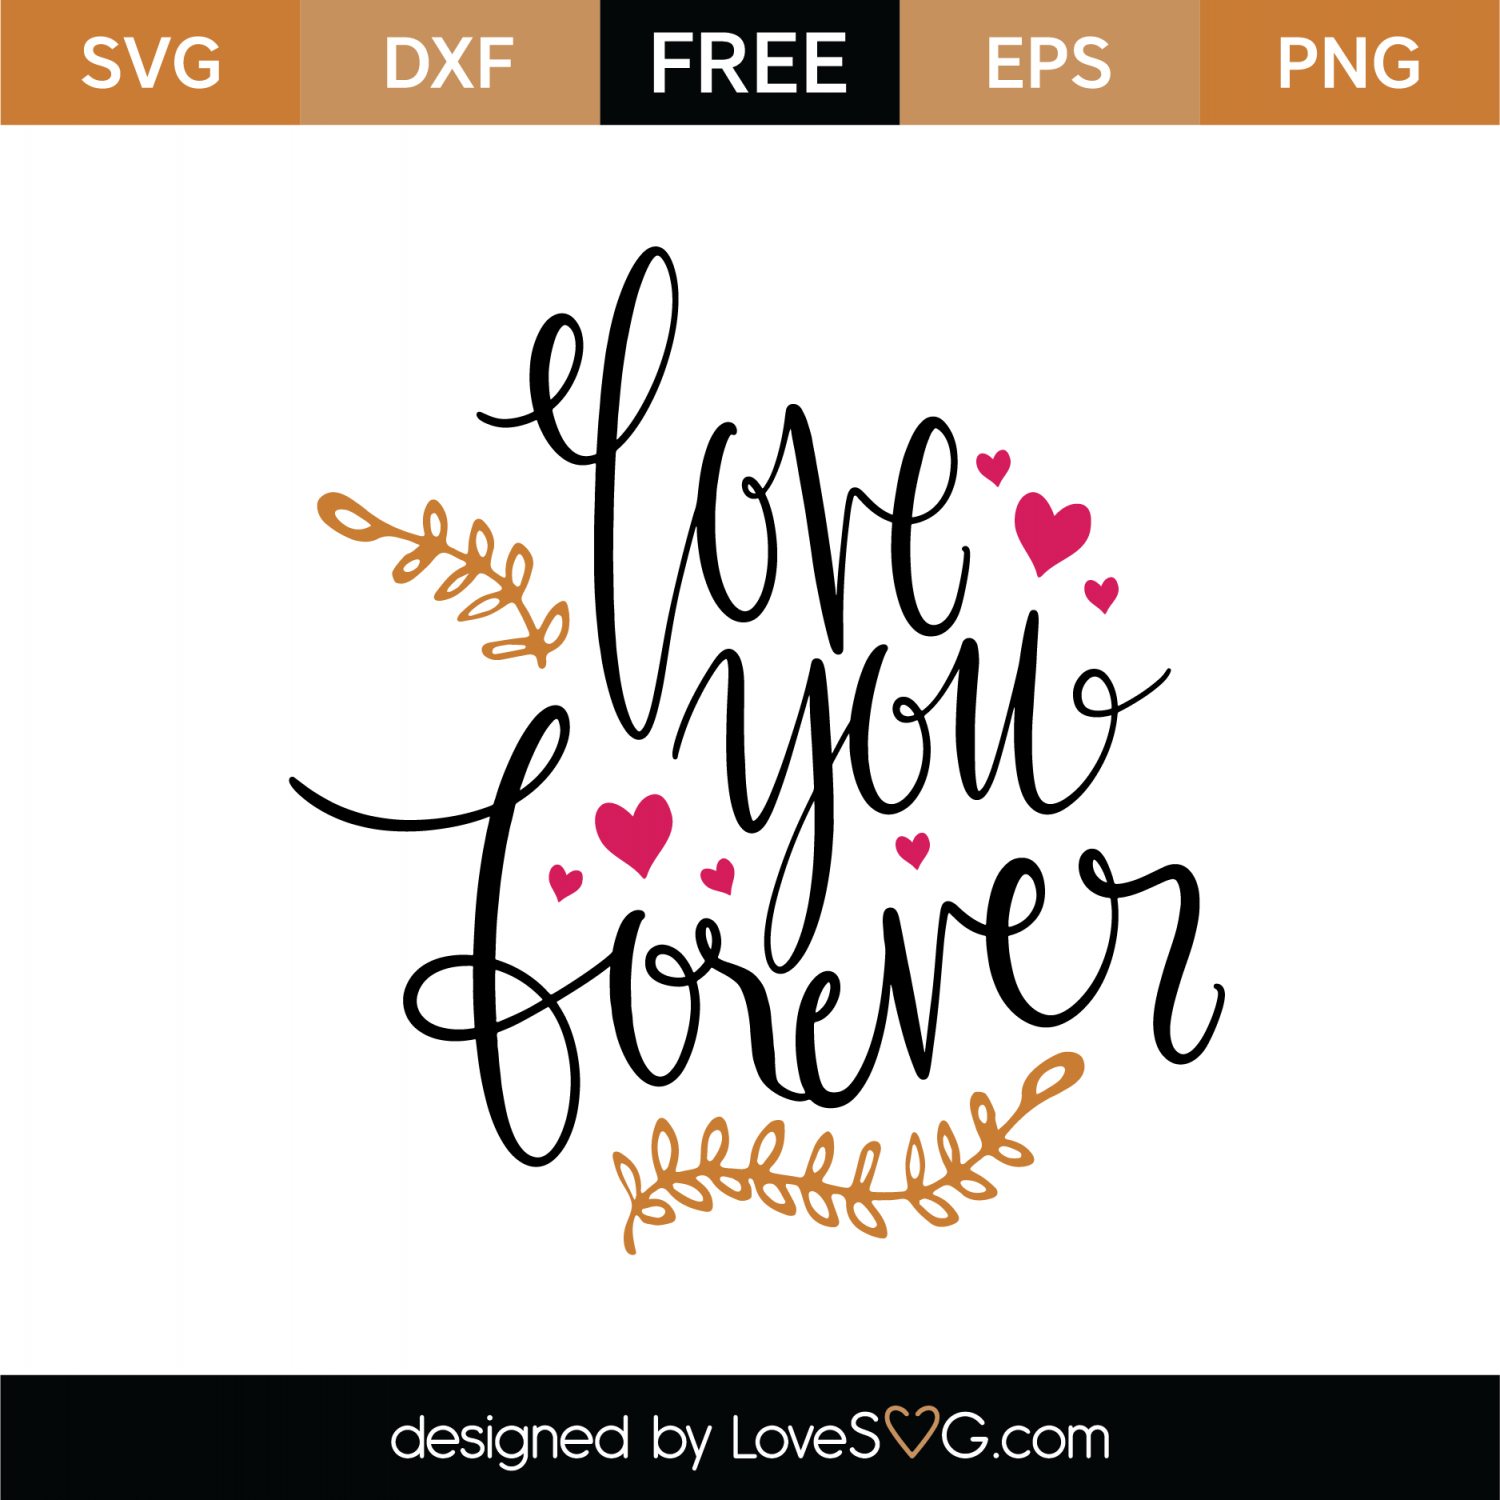 Download Free Love You Forever SVG Cut File | Lovesvg.com